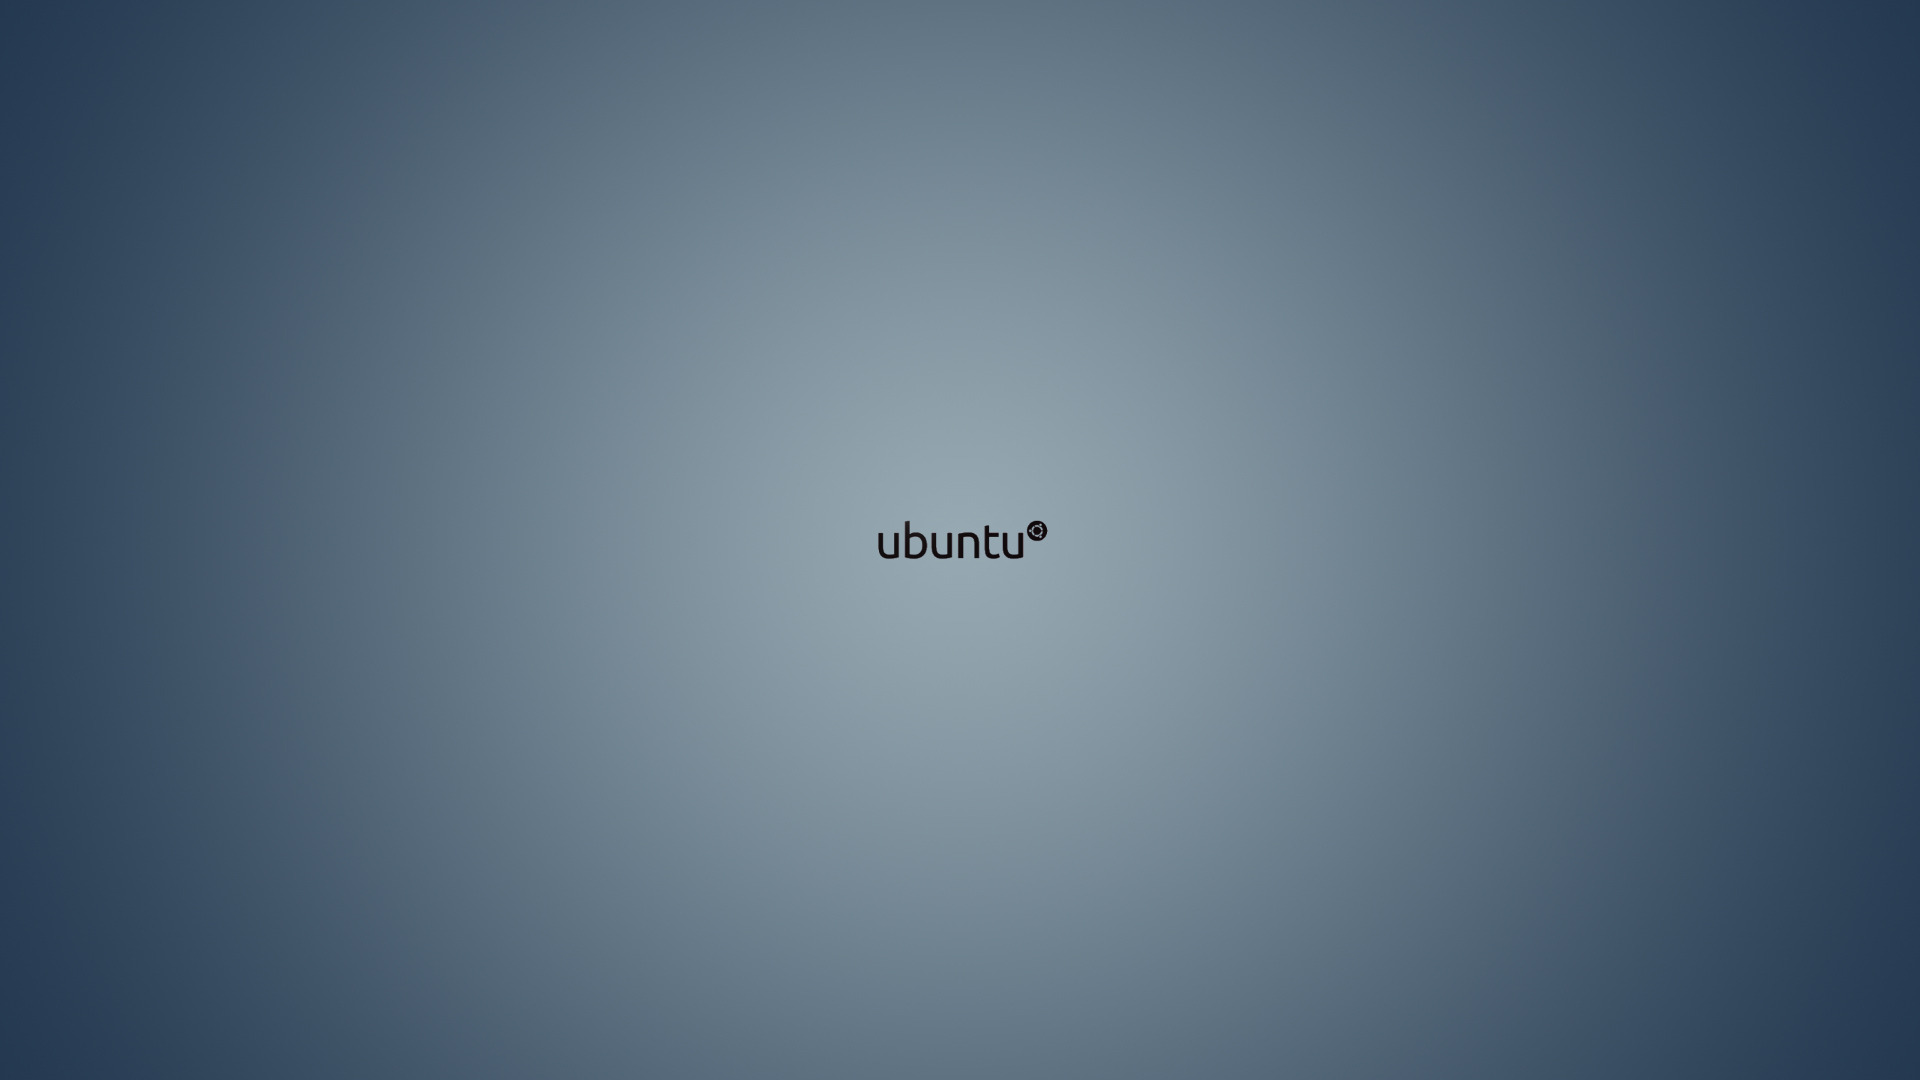 Linux 082 Ubuntu